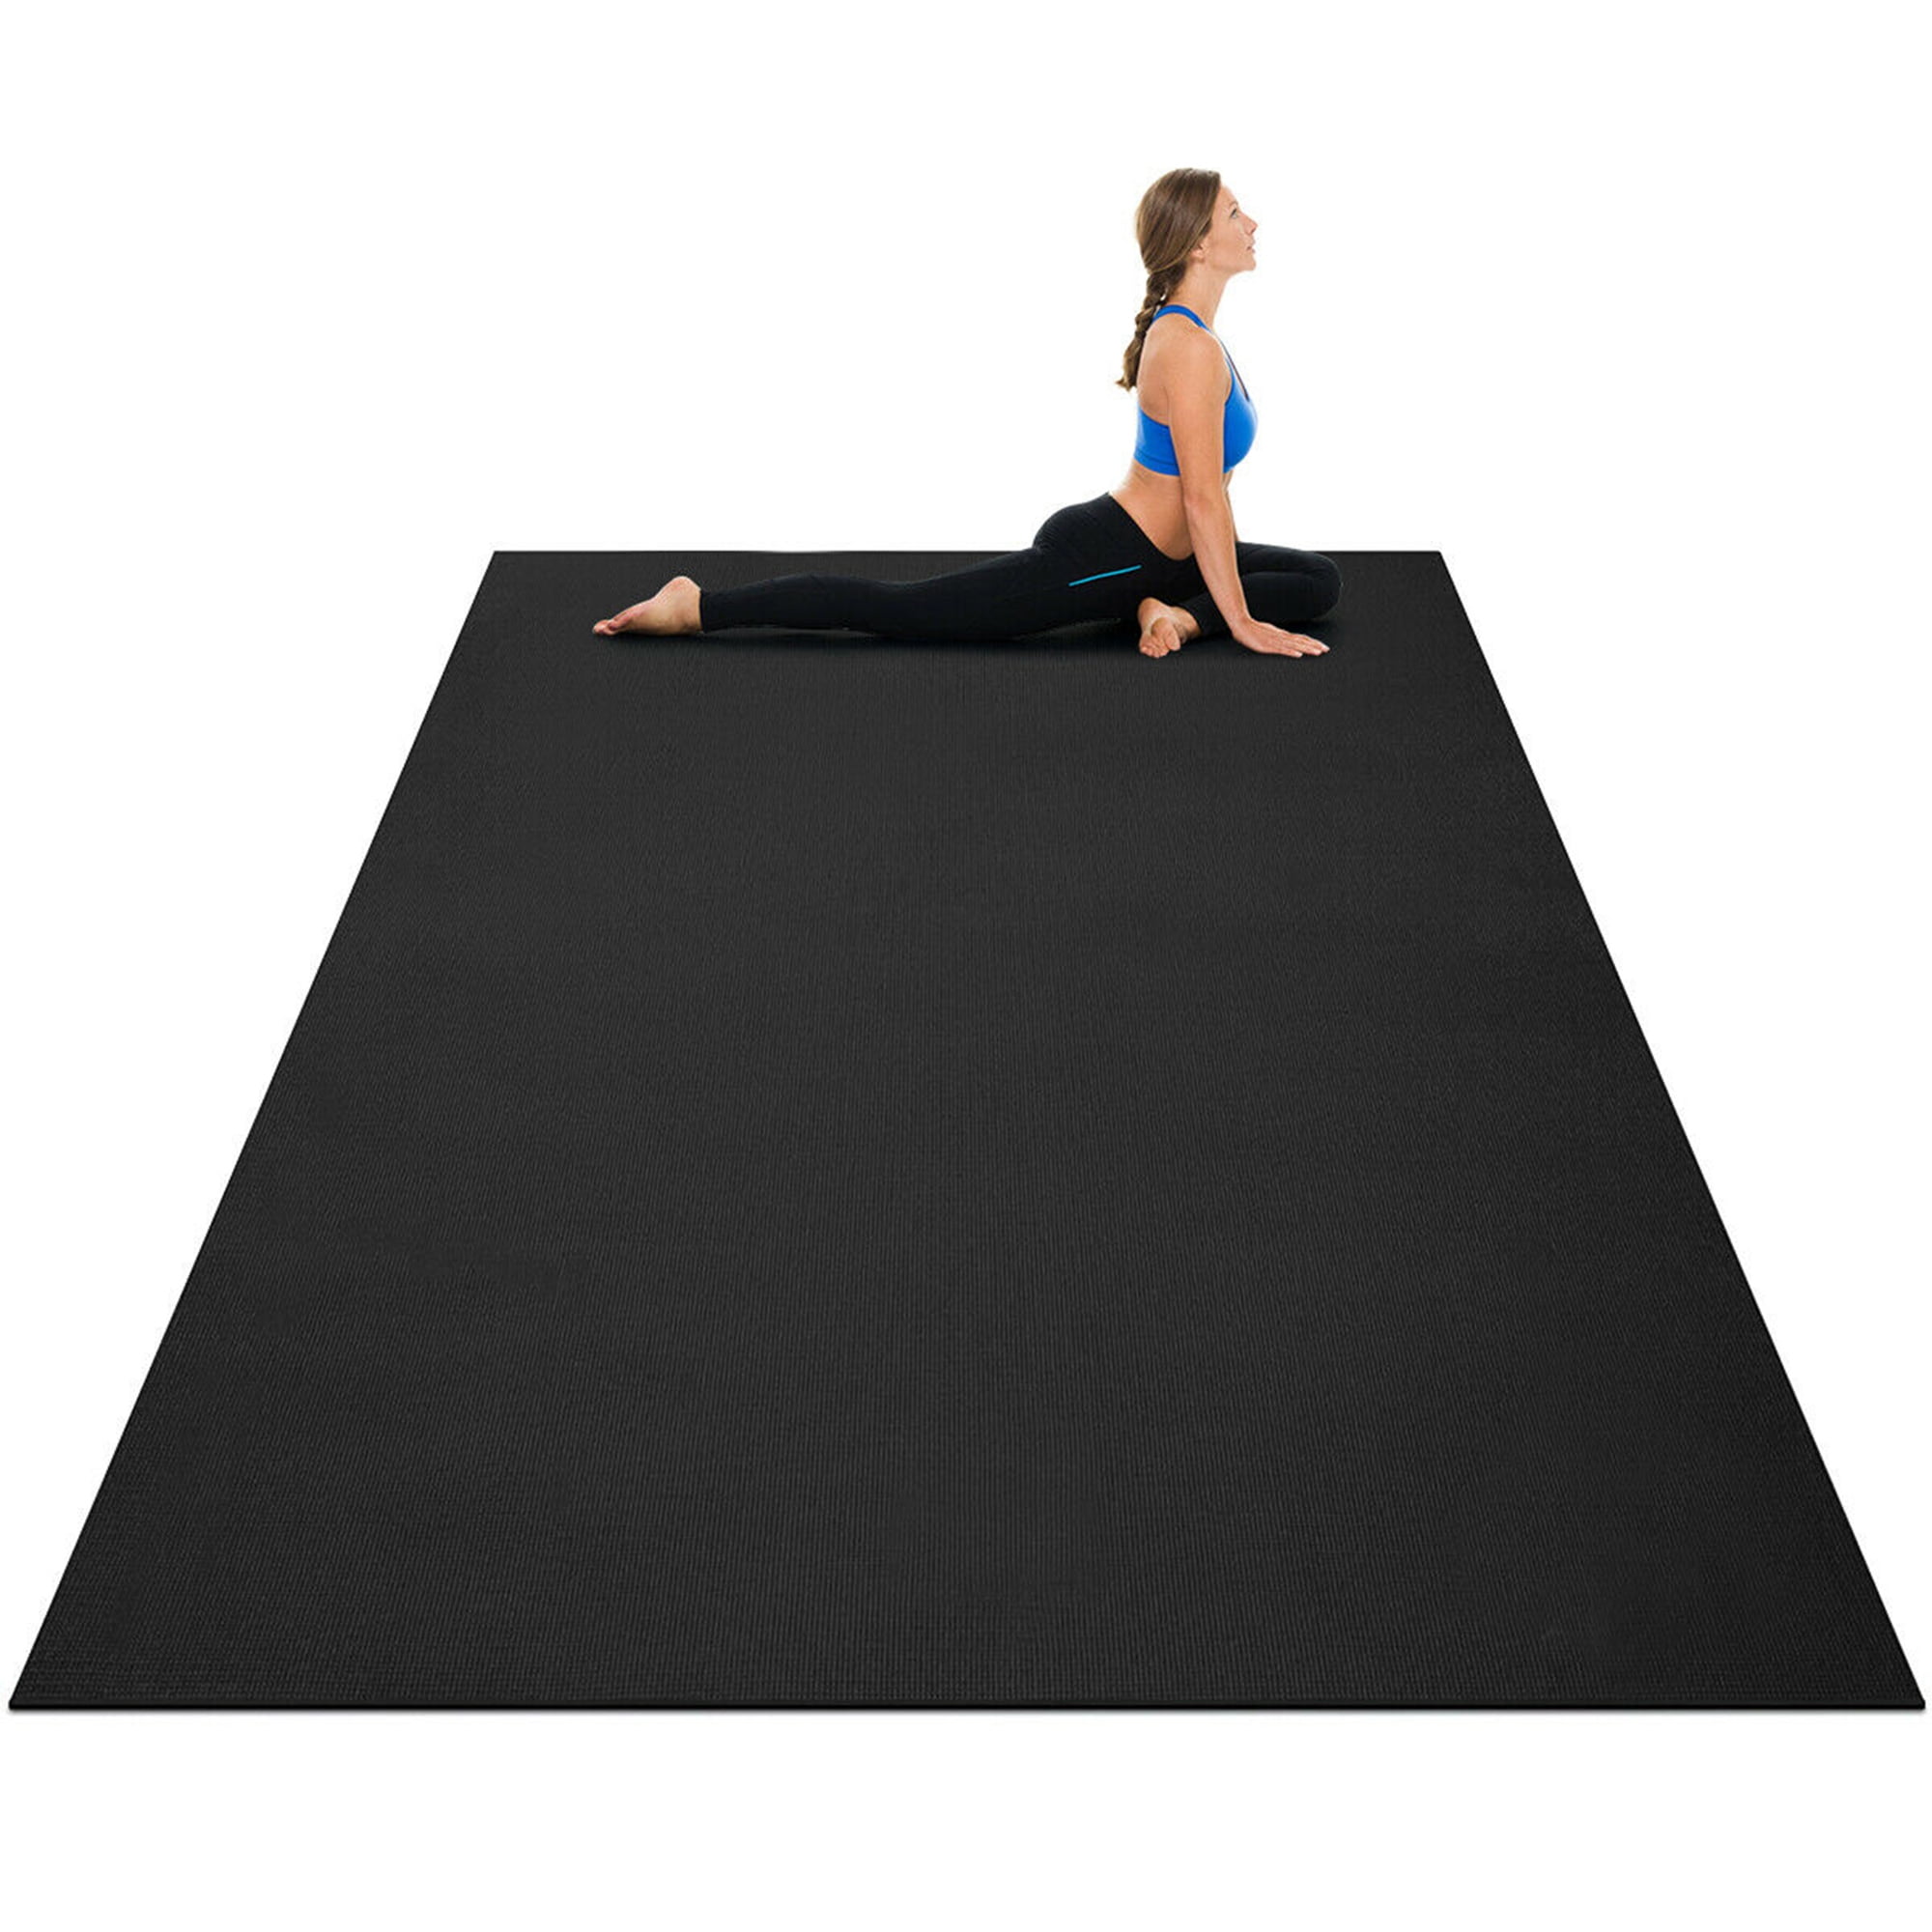 6' x 4' x 8mm Extra Thick & Comfortable Black Premium Extra Large Yoga Mat 